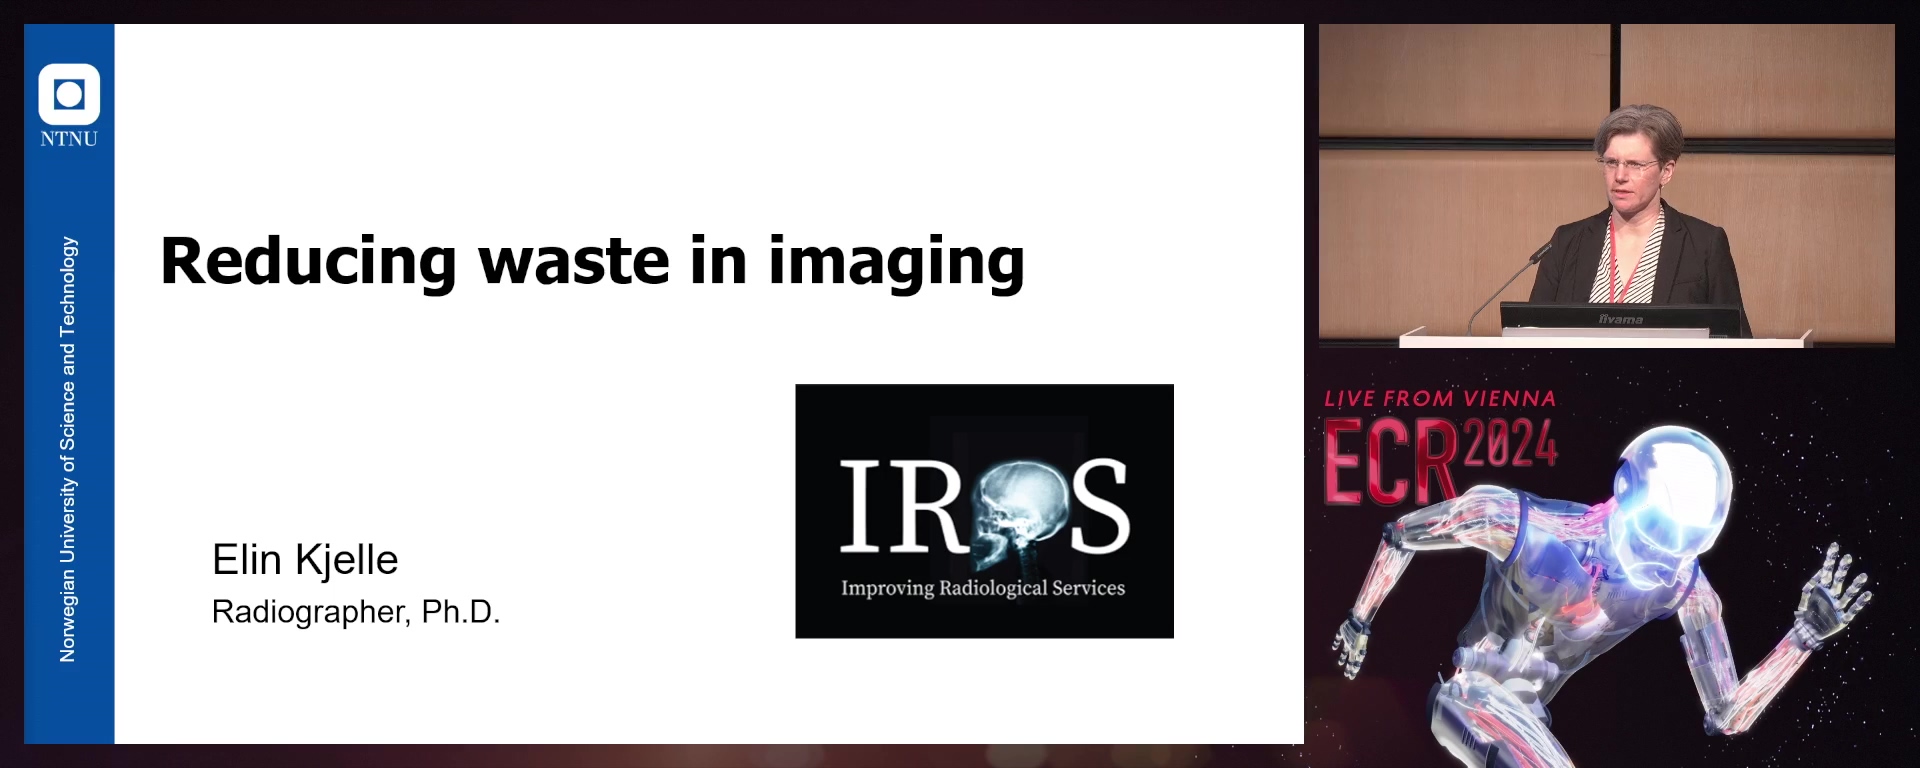 Reducing waste in imaging